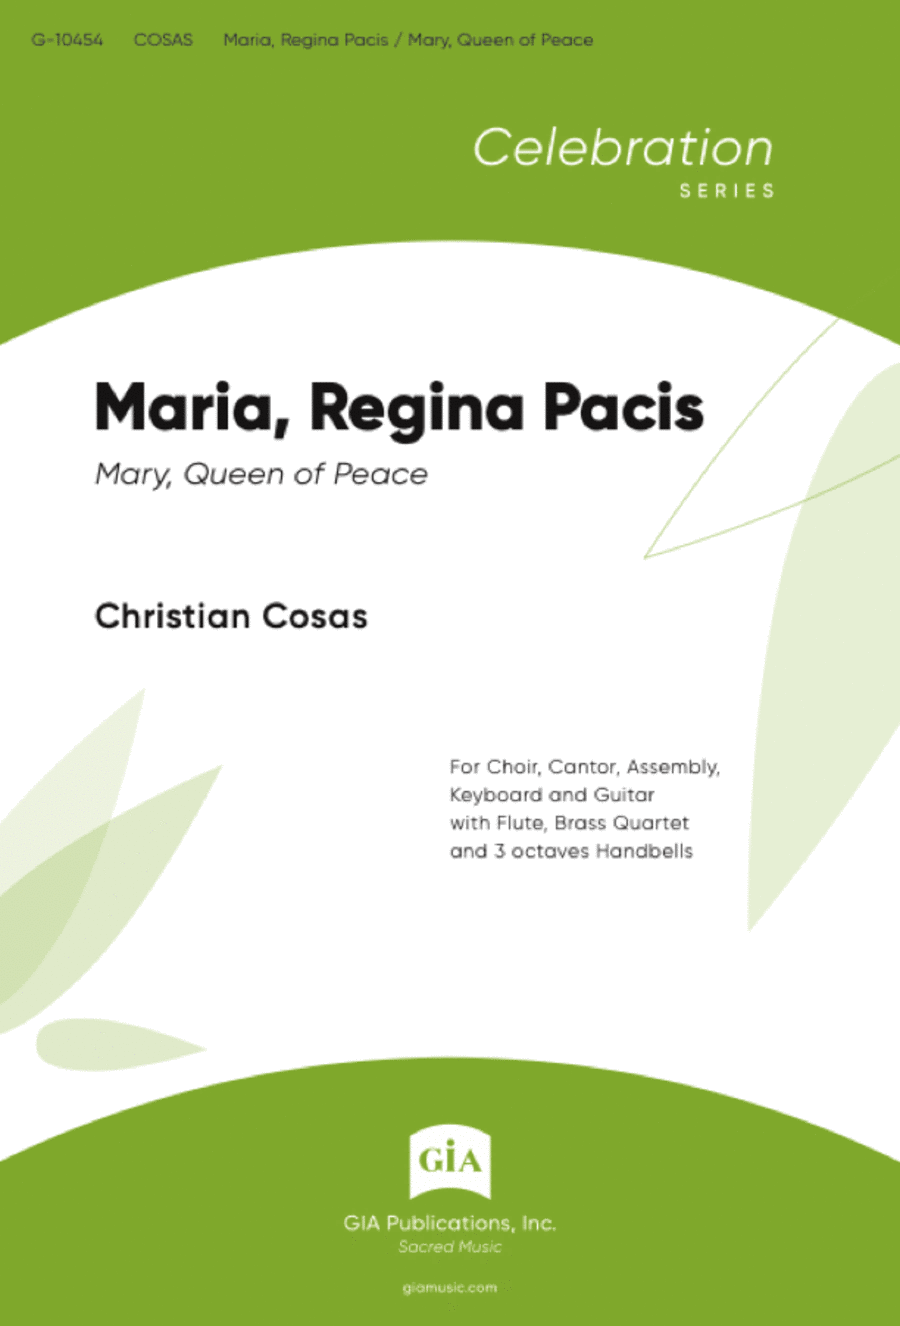 Maria, Regina Pacis - Guitar edition